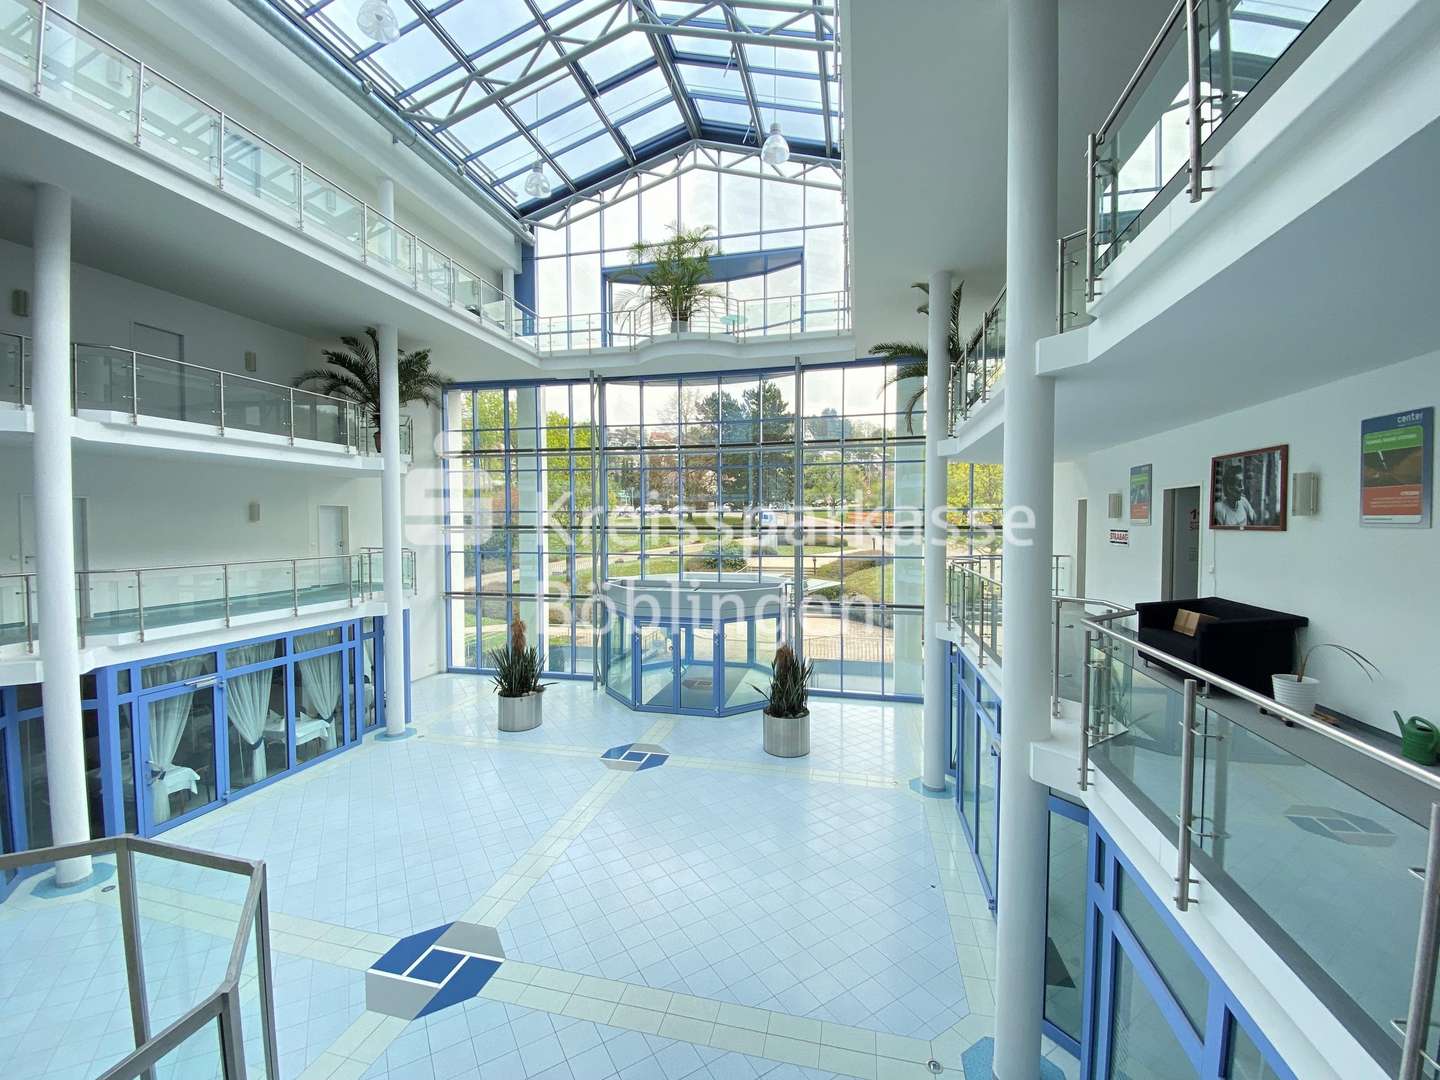 Atrium - Büro in 71229 Leonberg mit 697m² mieten